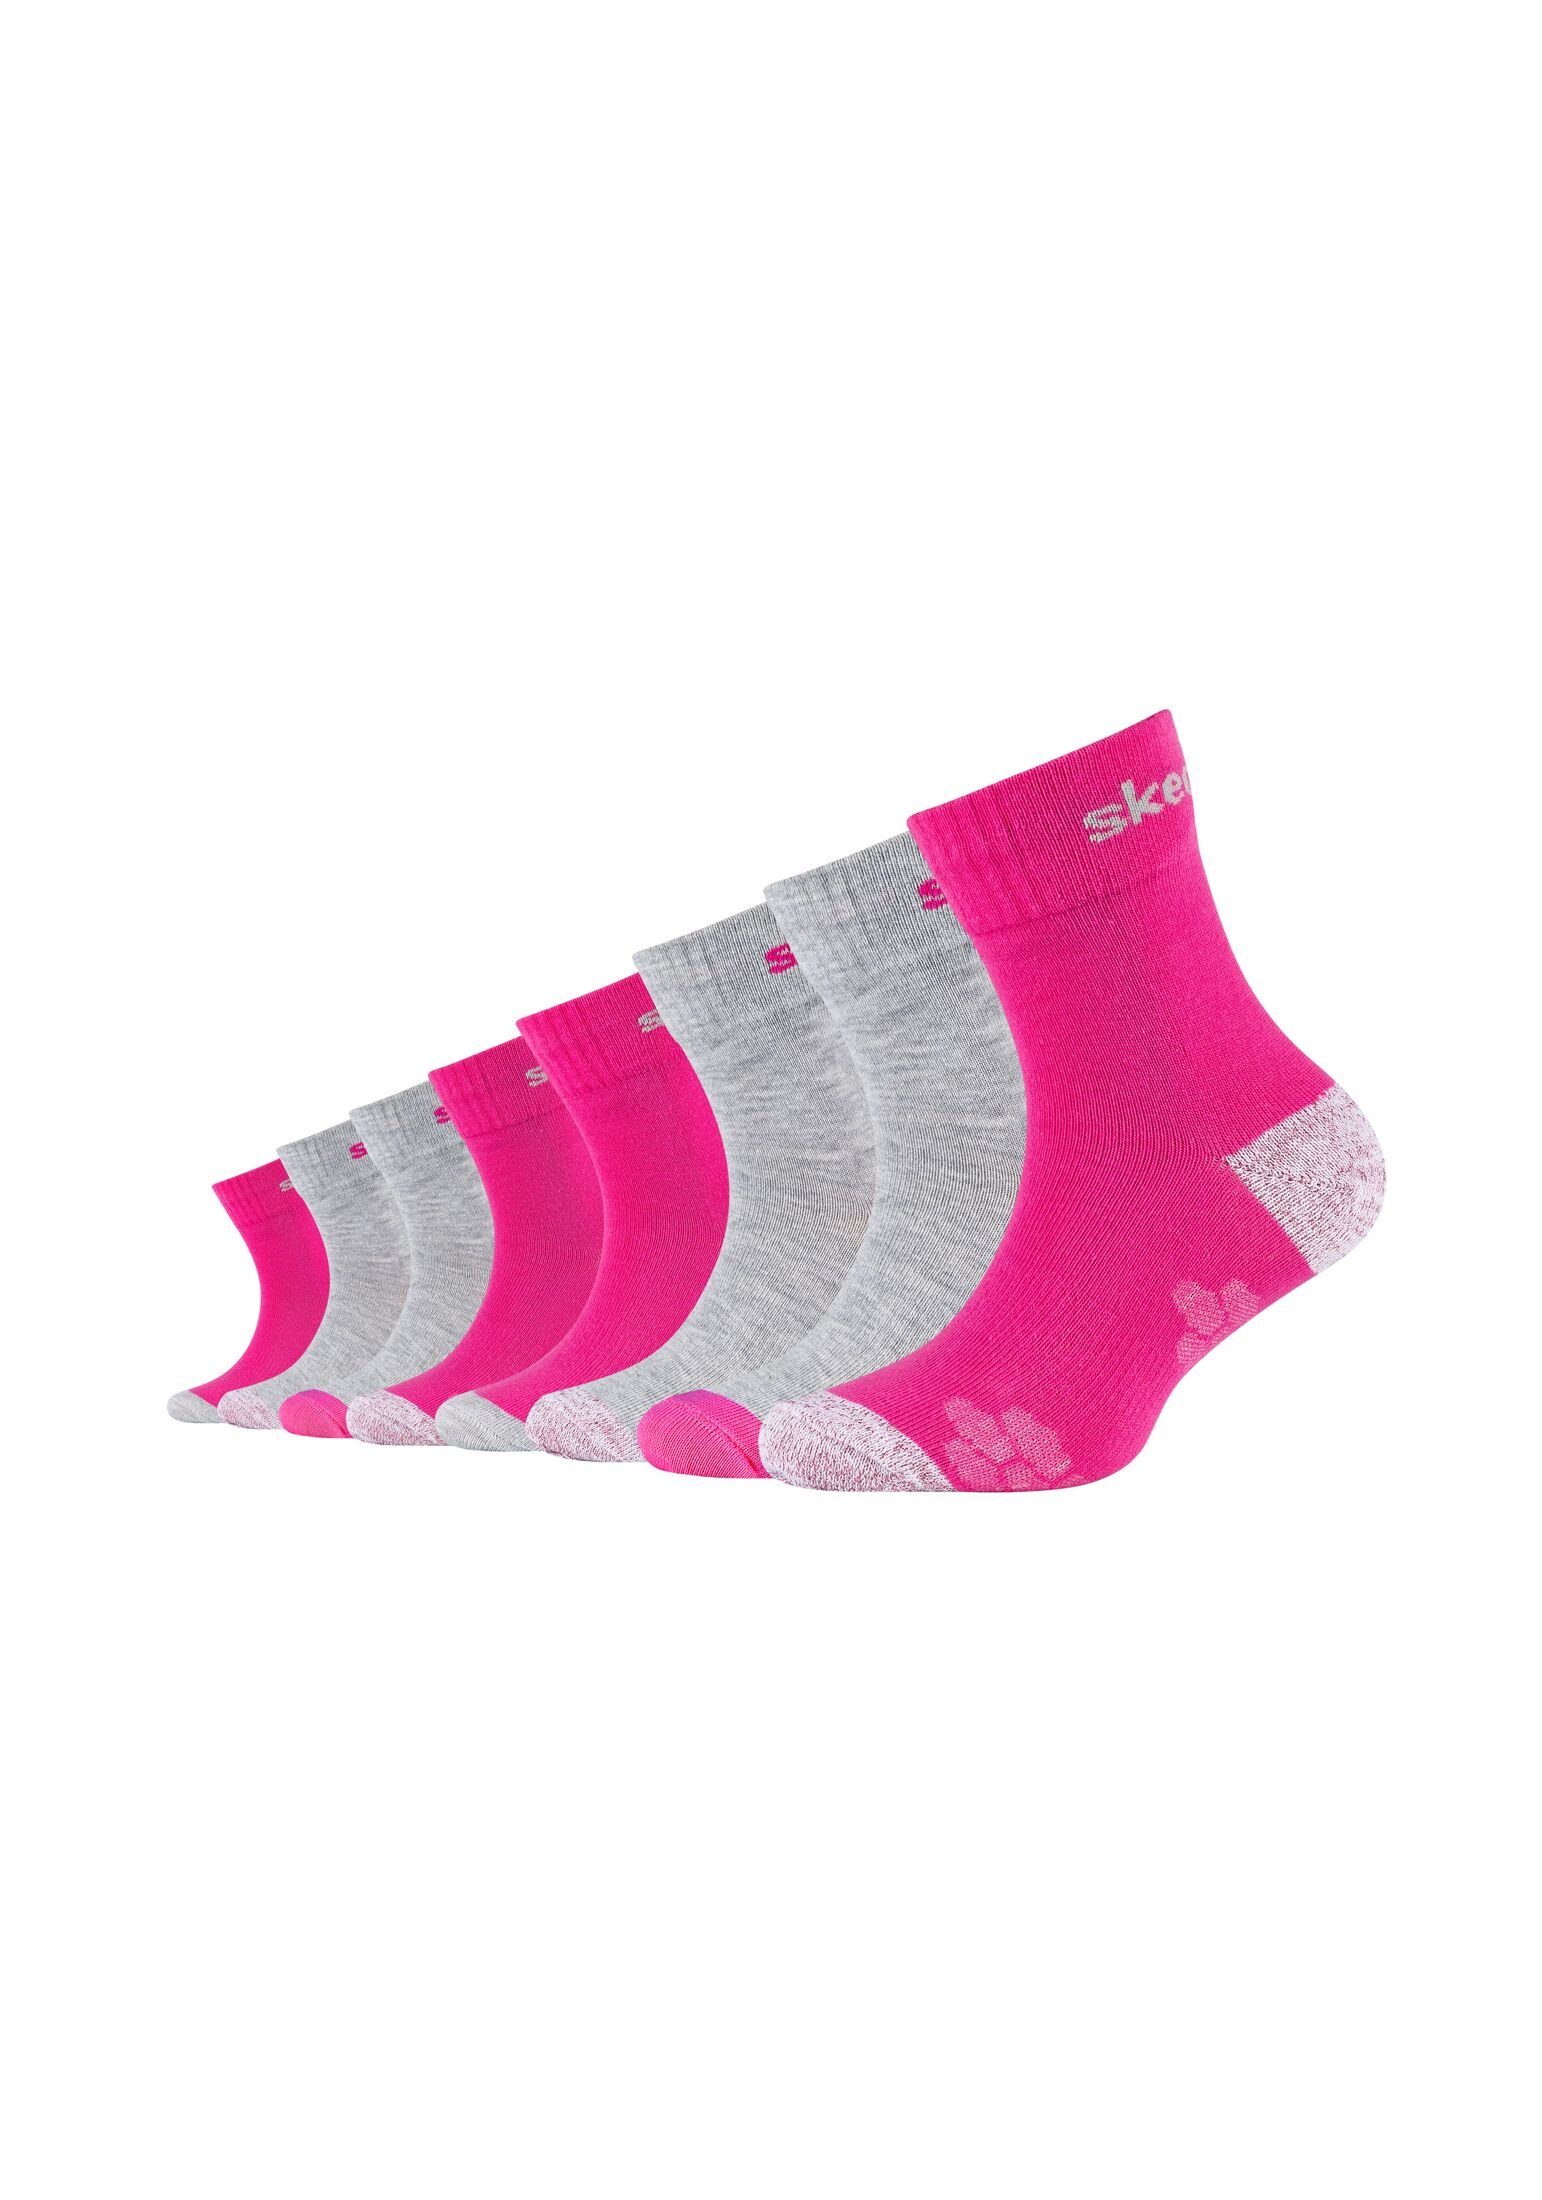 Skechers Socken Socken 8er mix Pack shocking pink